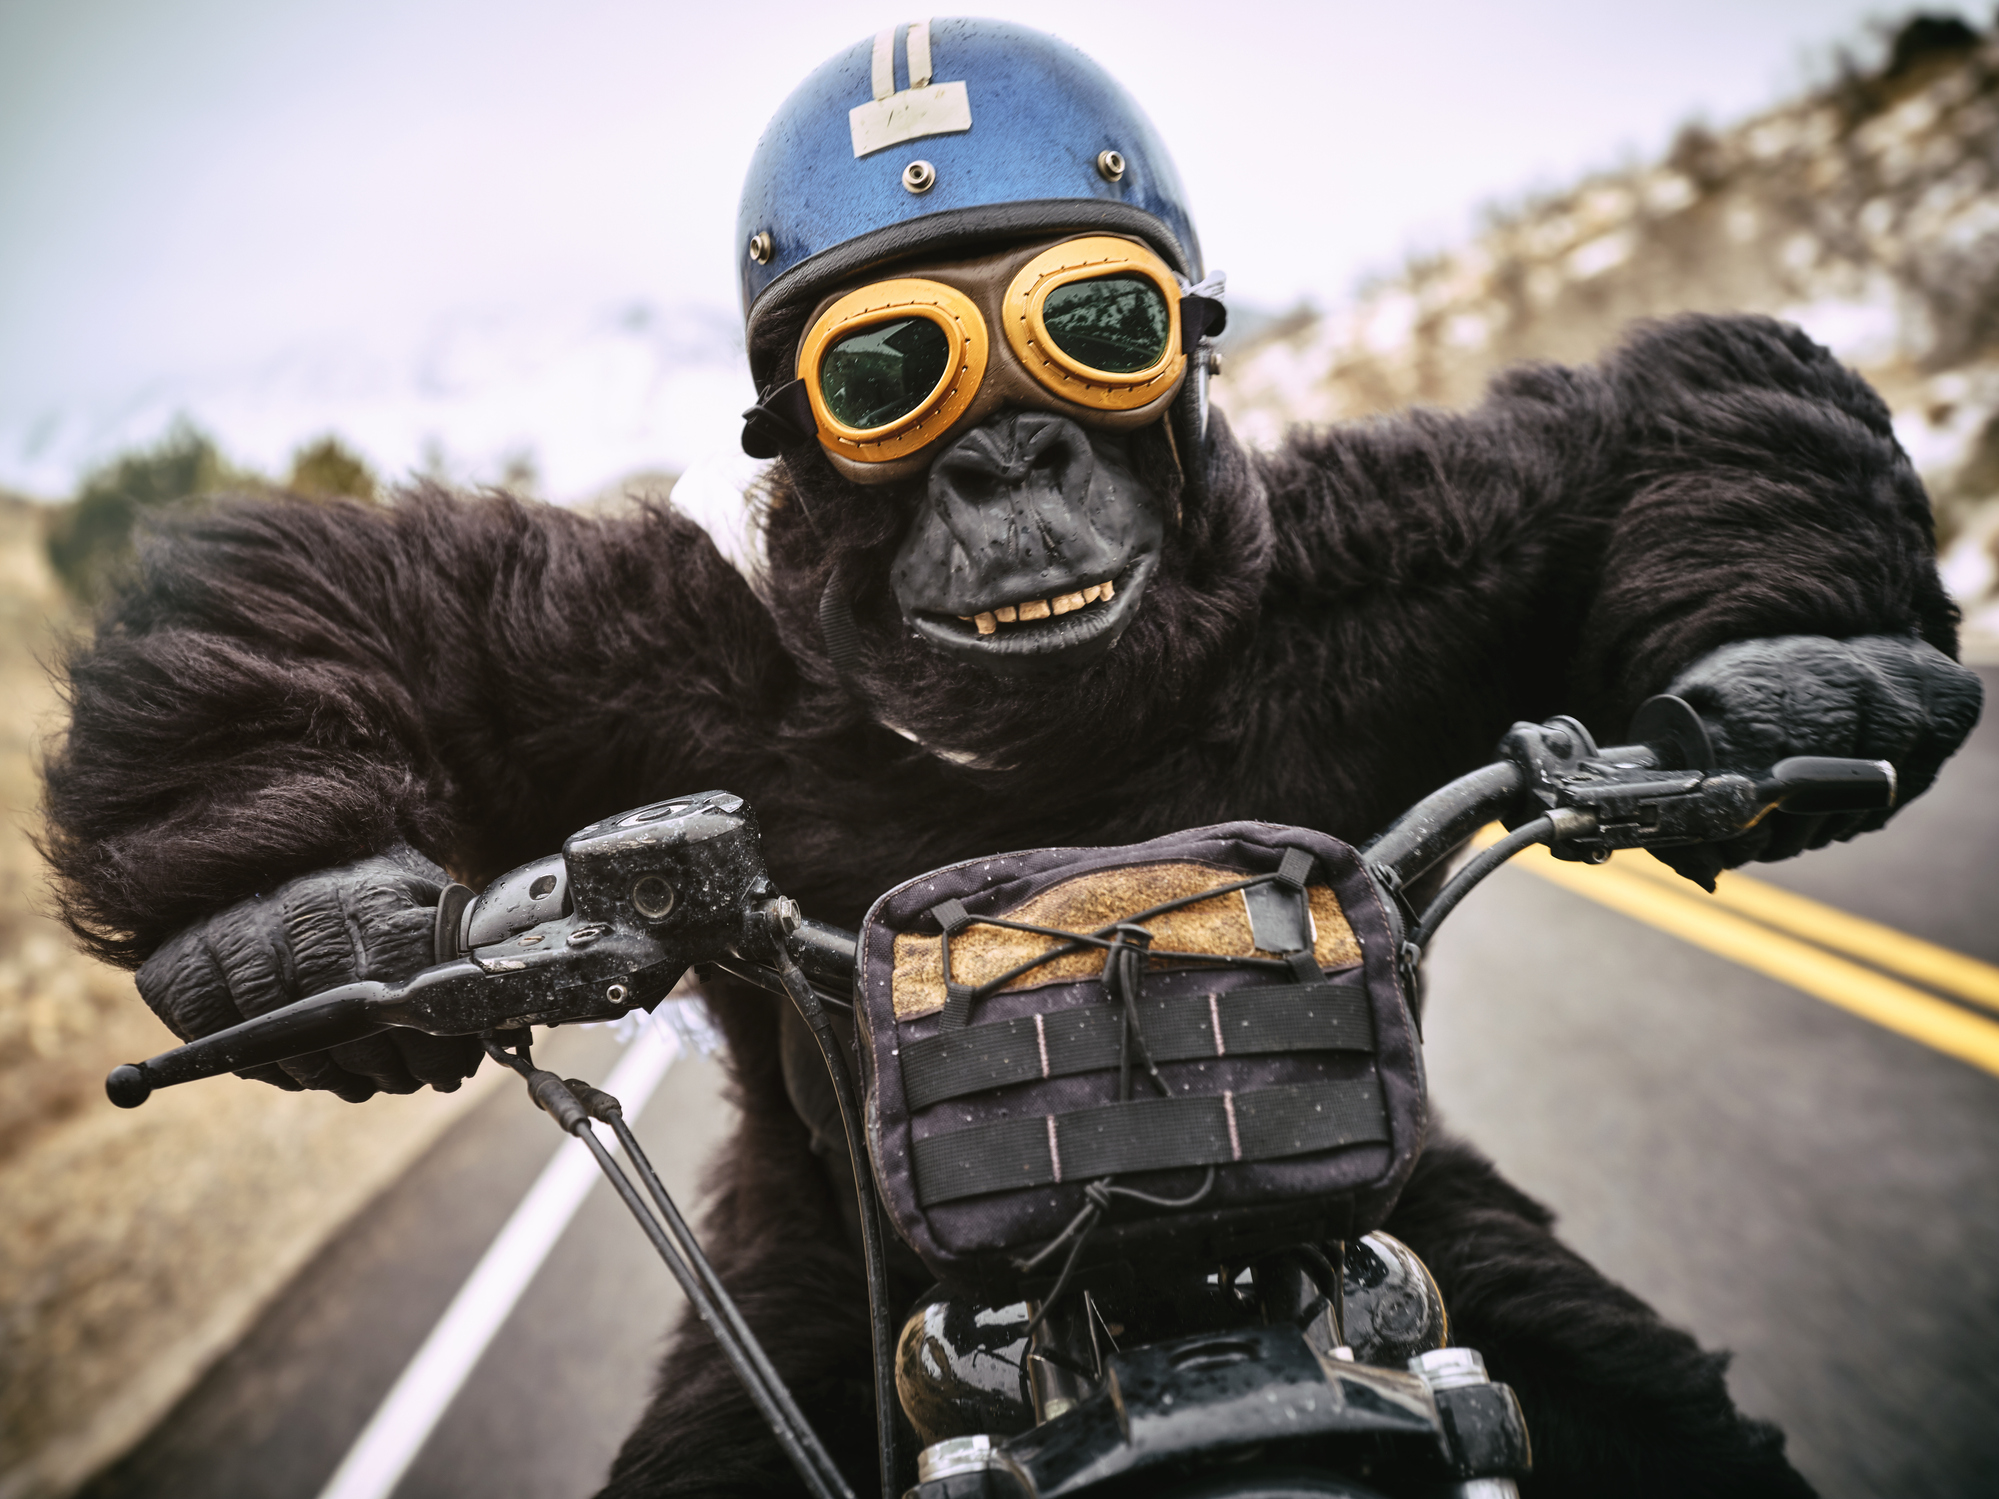 Gorilla on a motorcycle